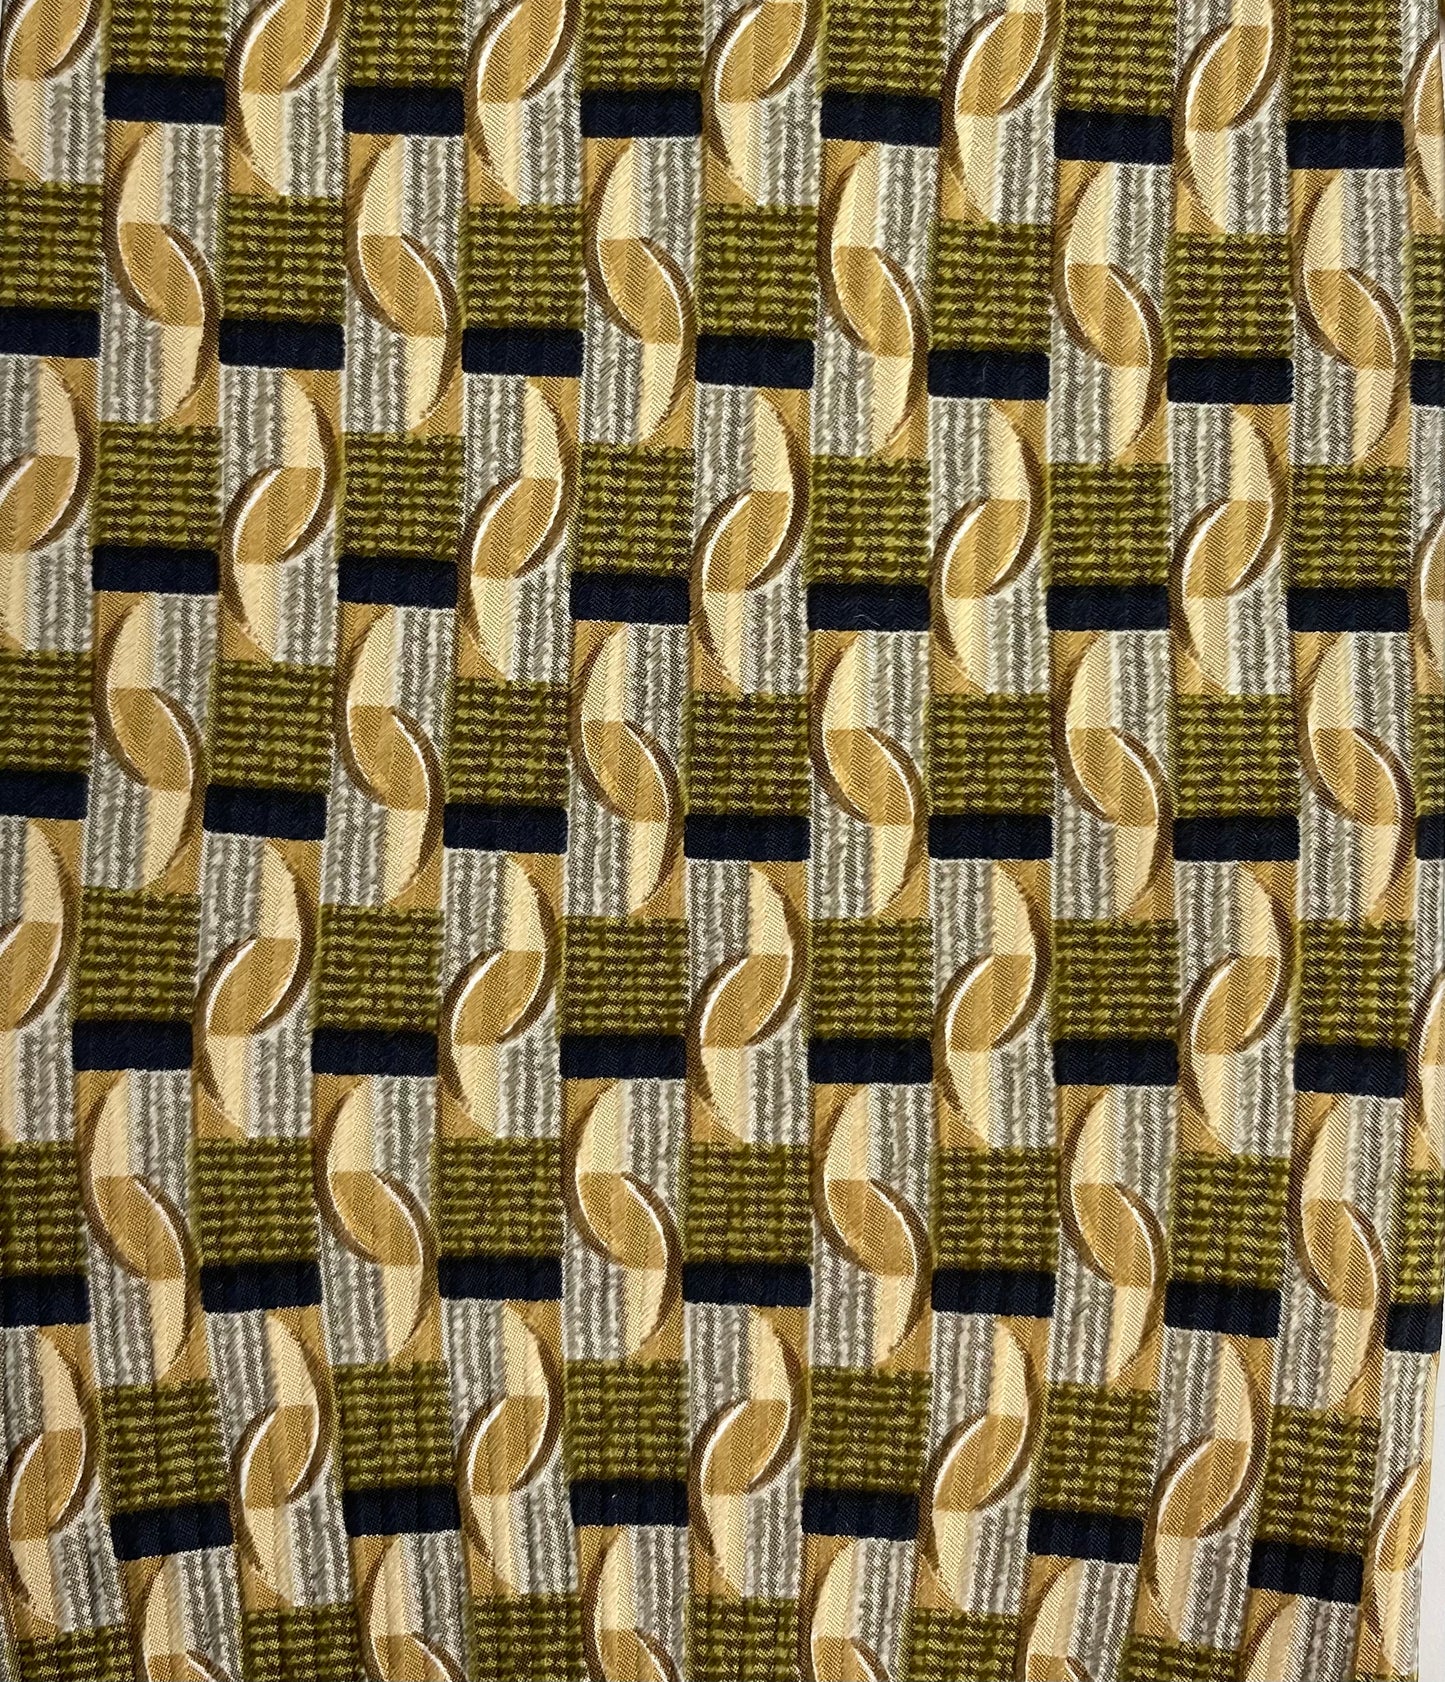 Close-up pattern detail of: 90s Deadstock Silk Necktie, Men's Vintage Gold Green Black Geometric Pattern Tie, NOS